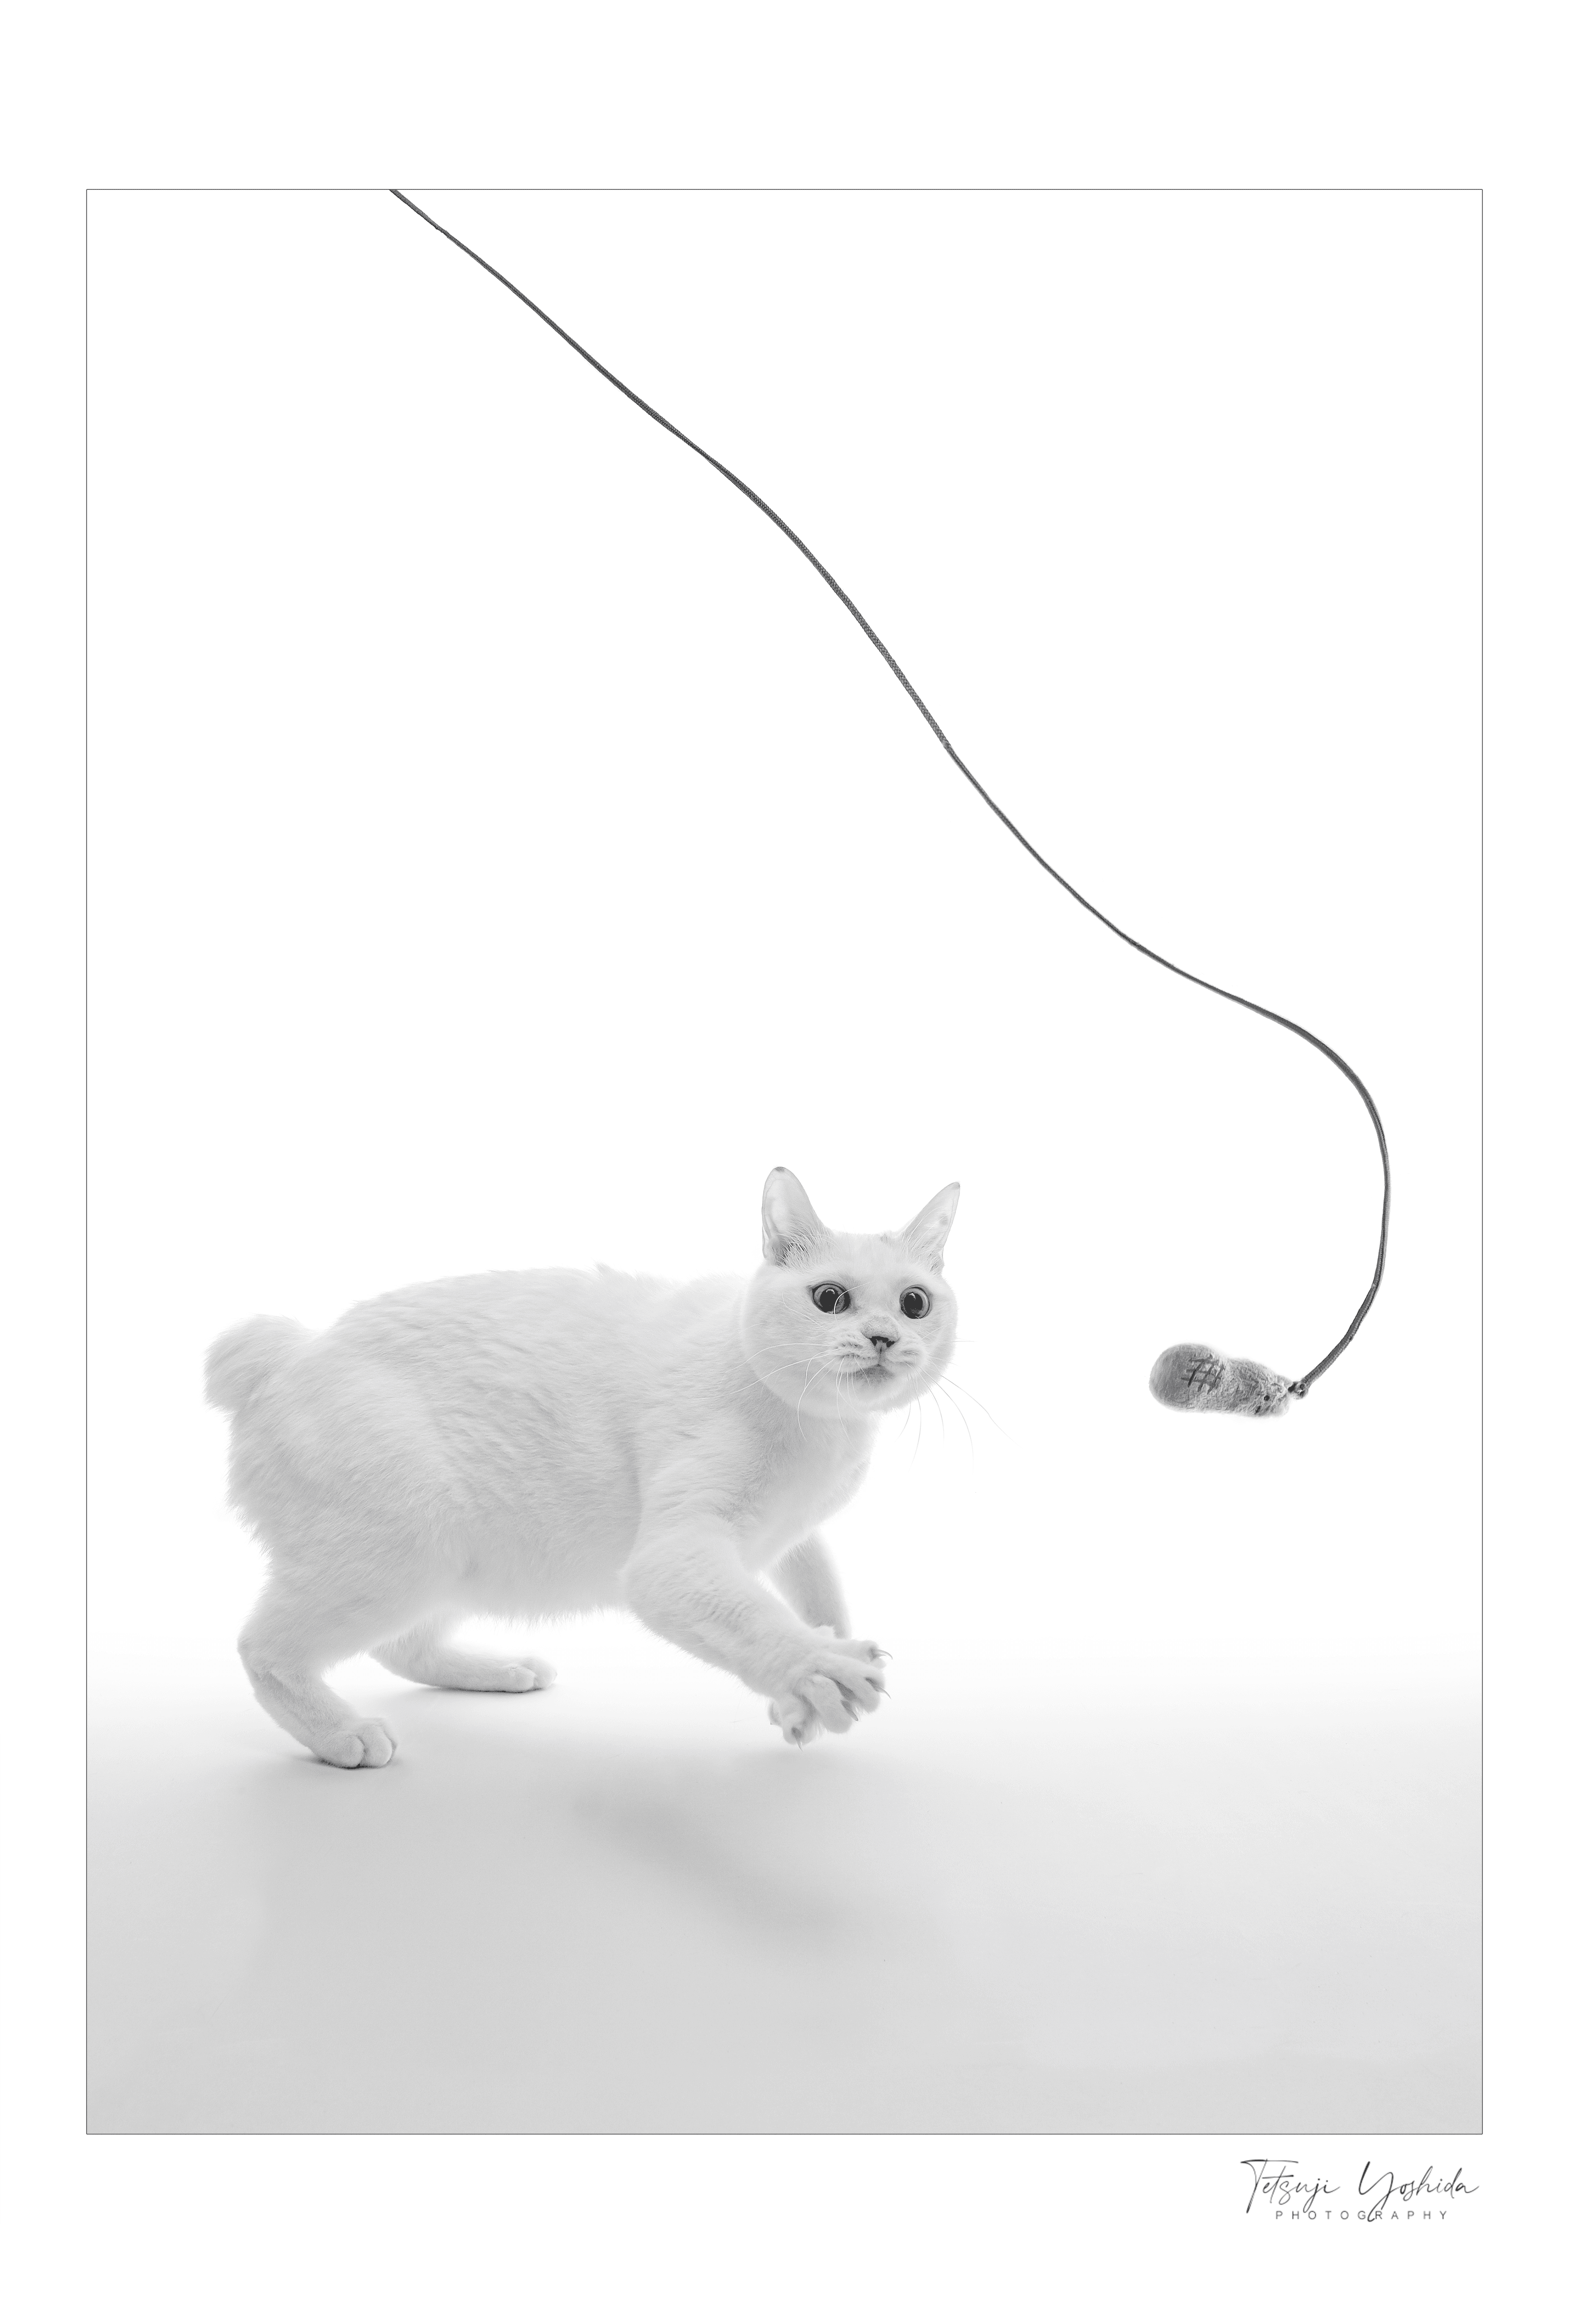 Teto the white cat "Chasing"